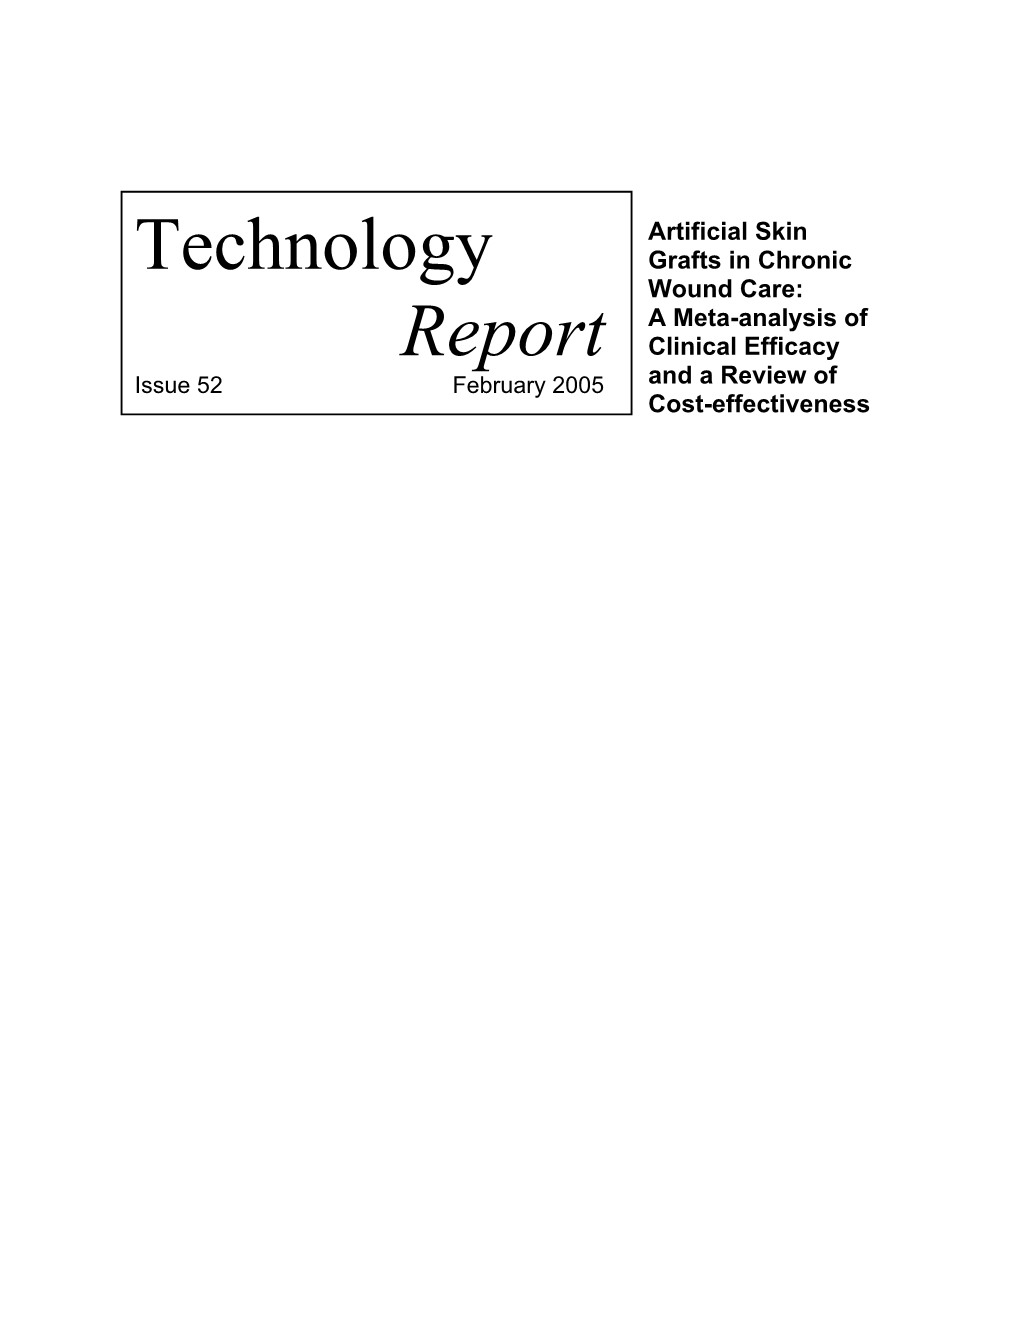 Technology Report No 52]